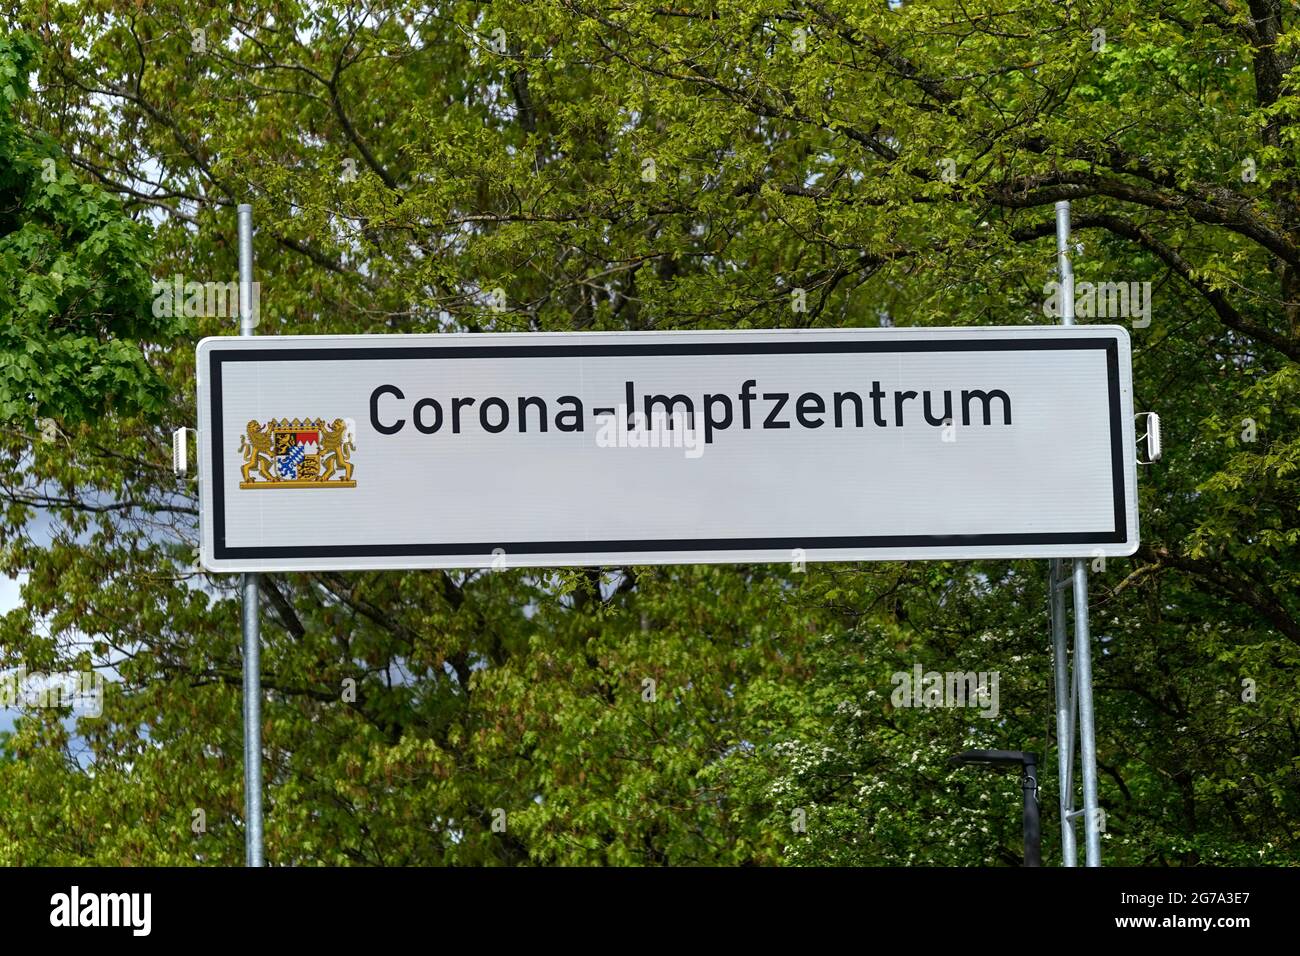 Deutschland, Bayern, Oberbayern, Schutzkorona-Impfzentrum, Stockfoto